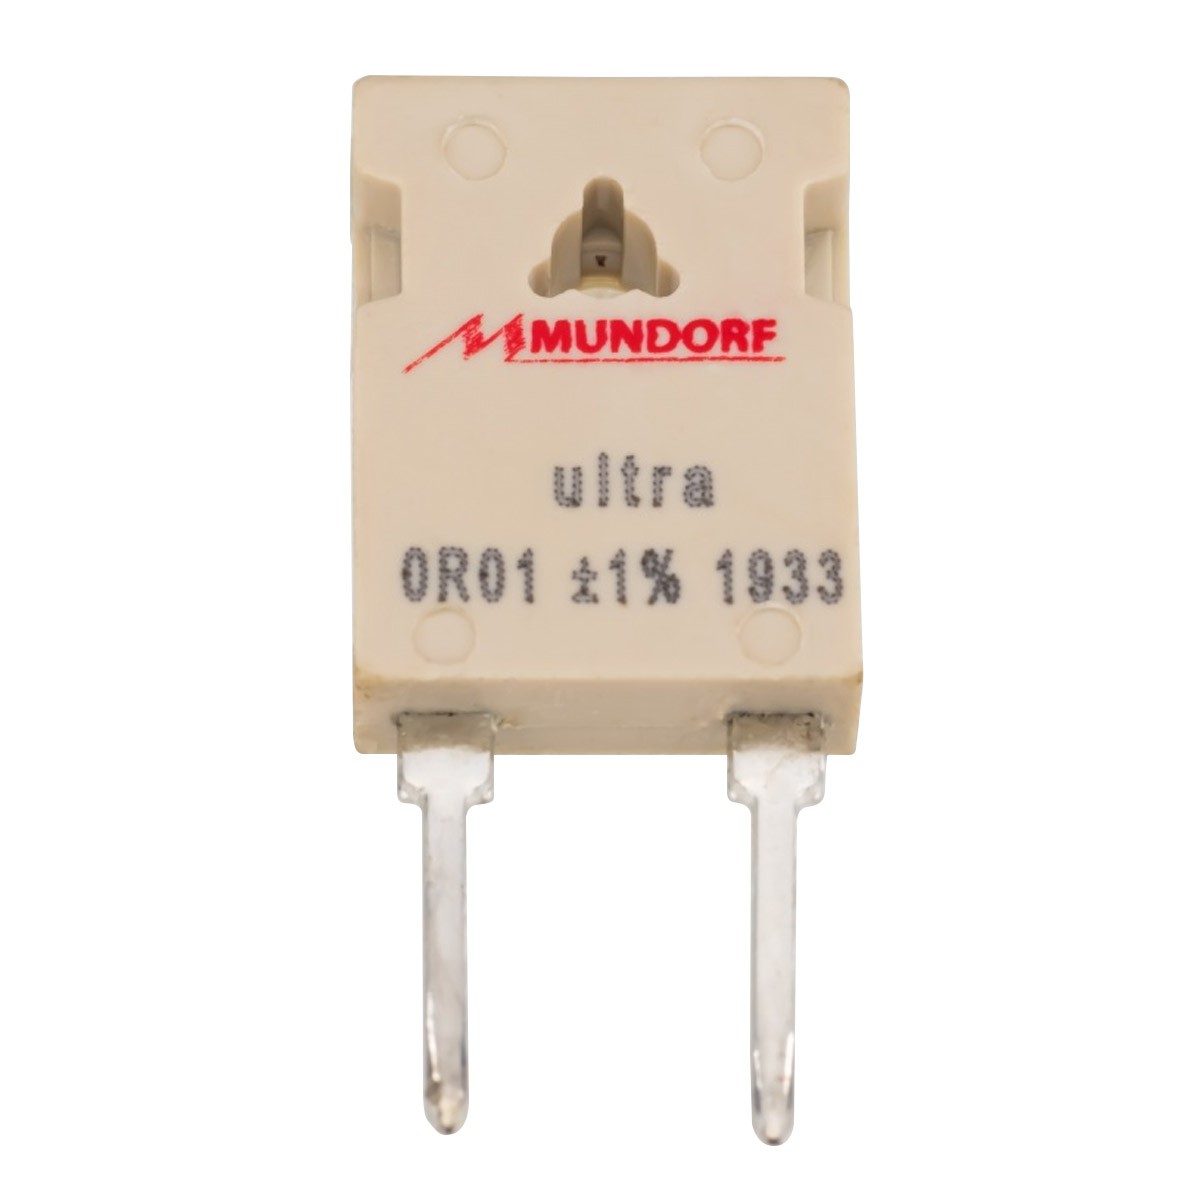 MUNDORF MRESIST ULTRA Resistor 30W 10 Ohm